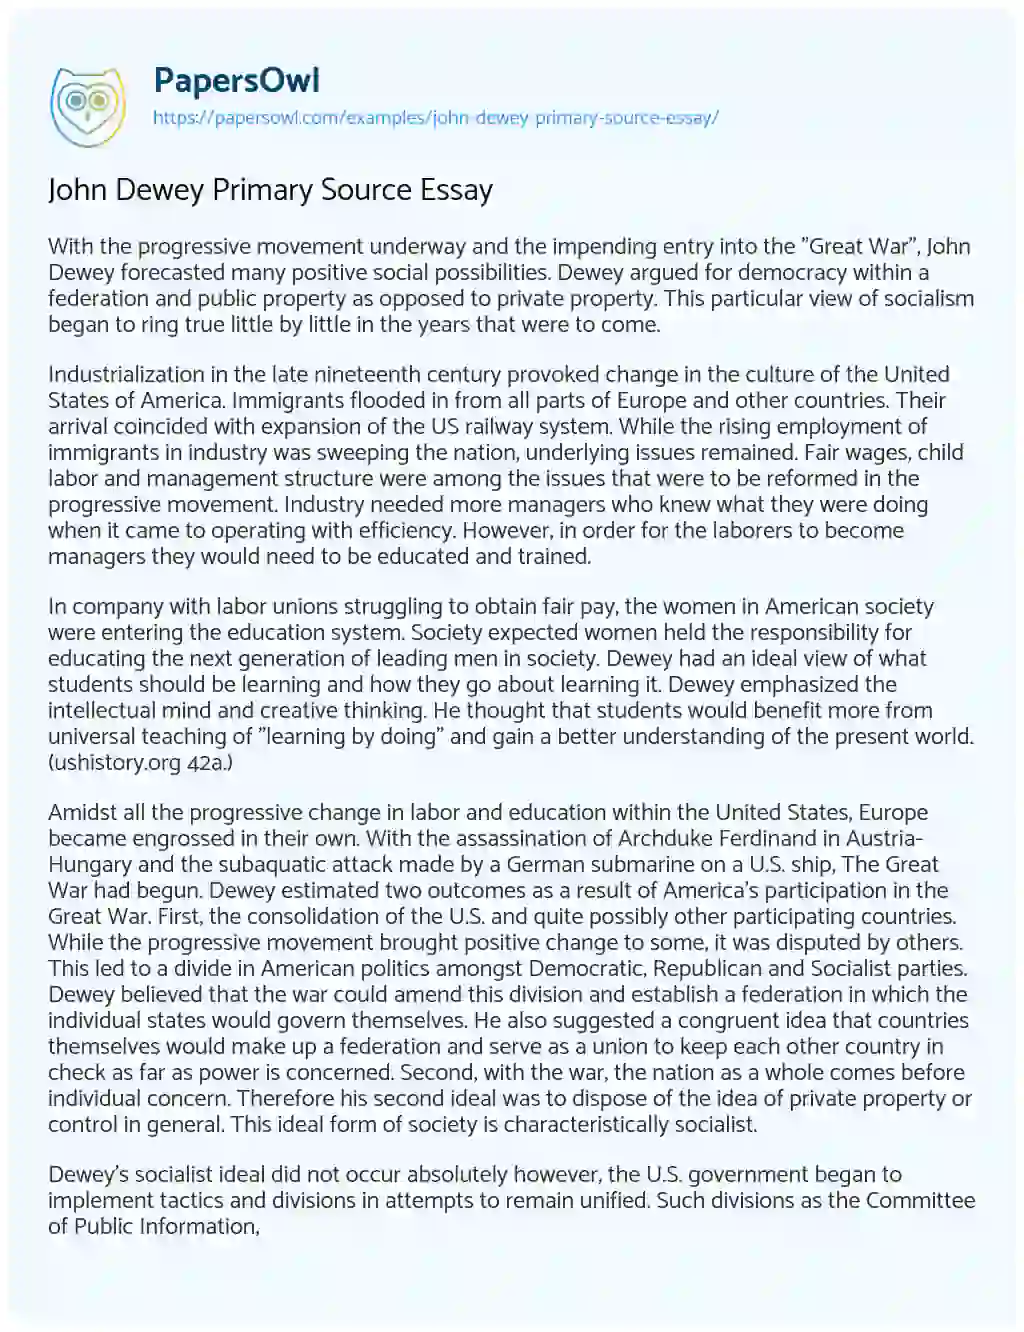 Essay on John Dewey Primary Source Essay